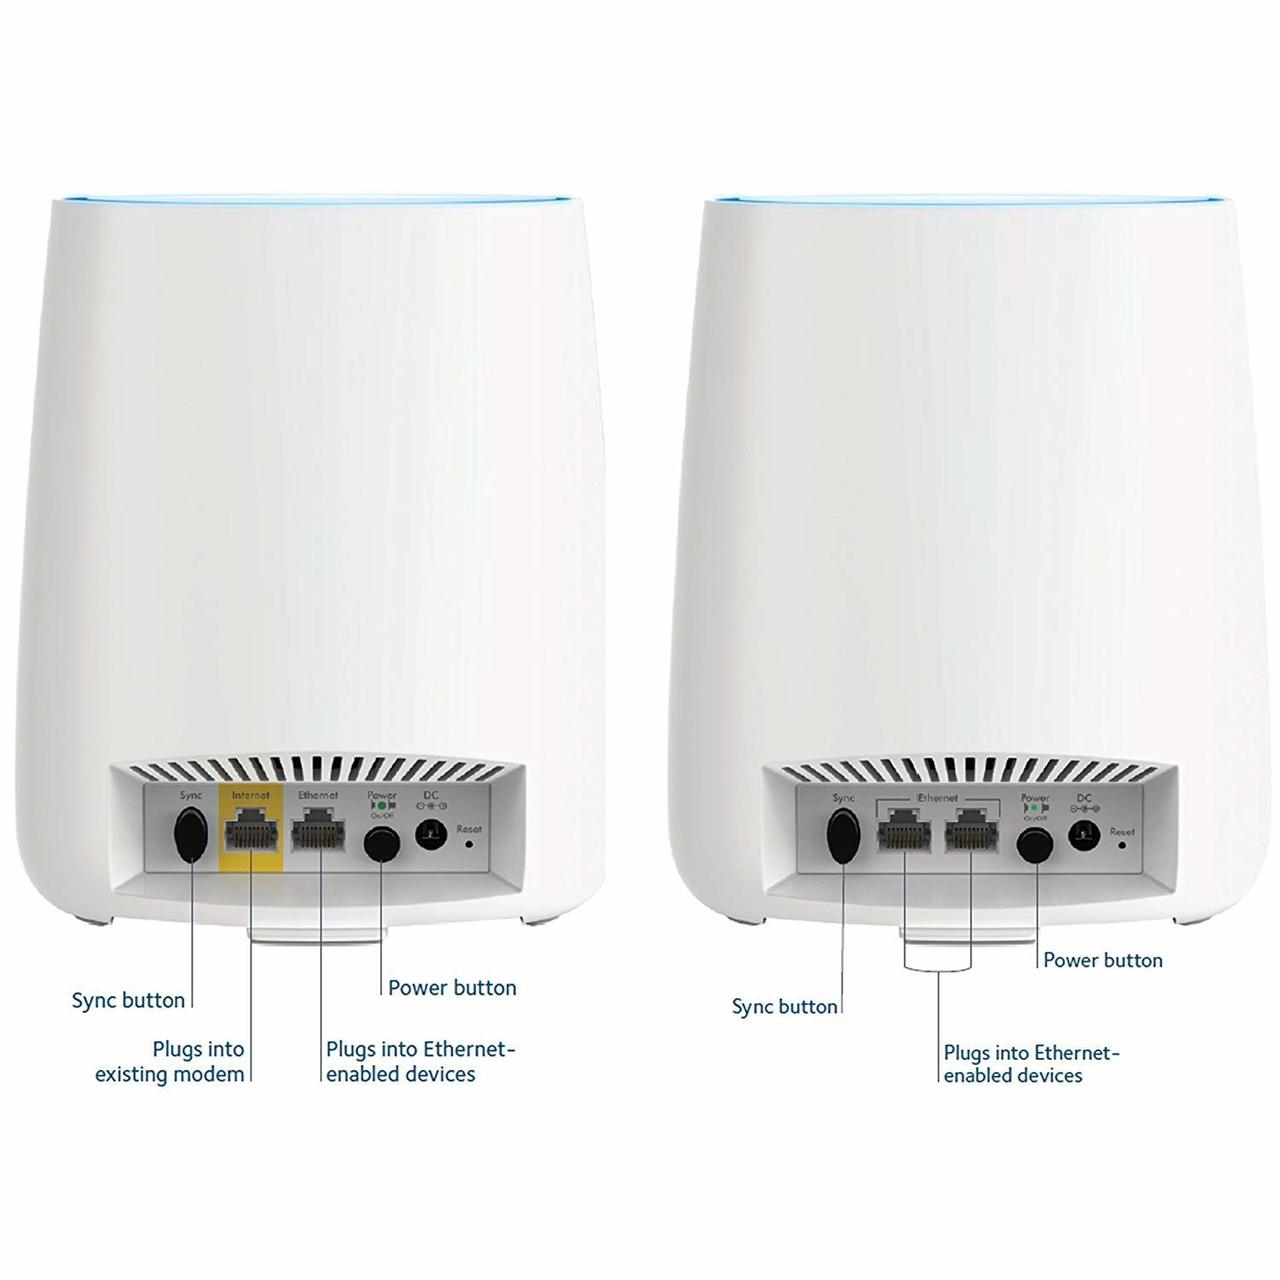 NETGEAR RBK53-100NAR Orbi AC3000 Tri-band WiFi Router - Certified Refurbished